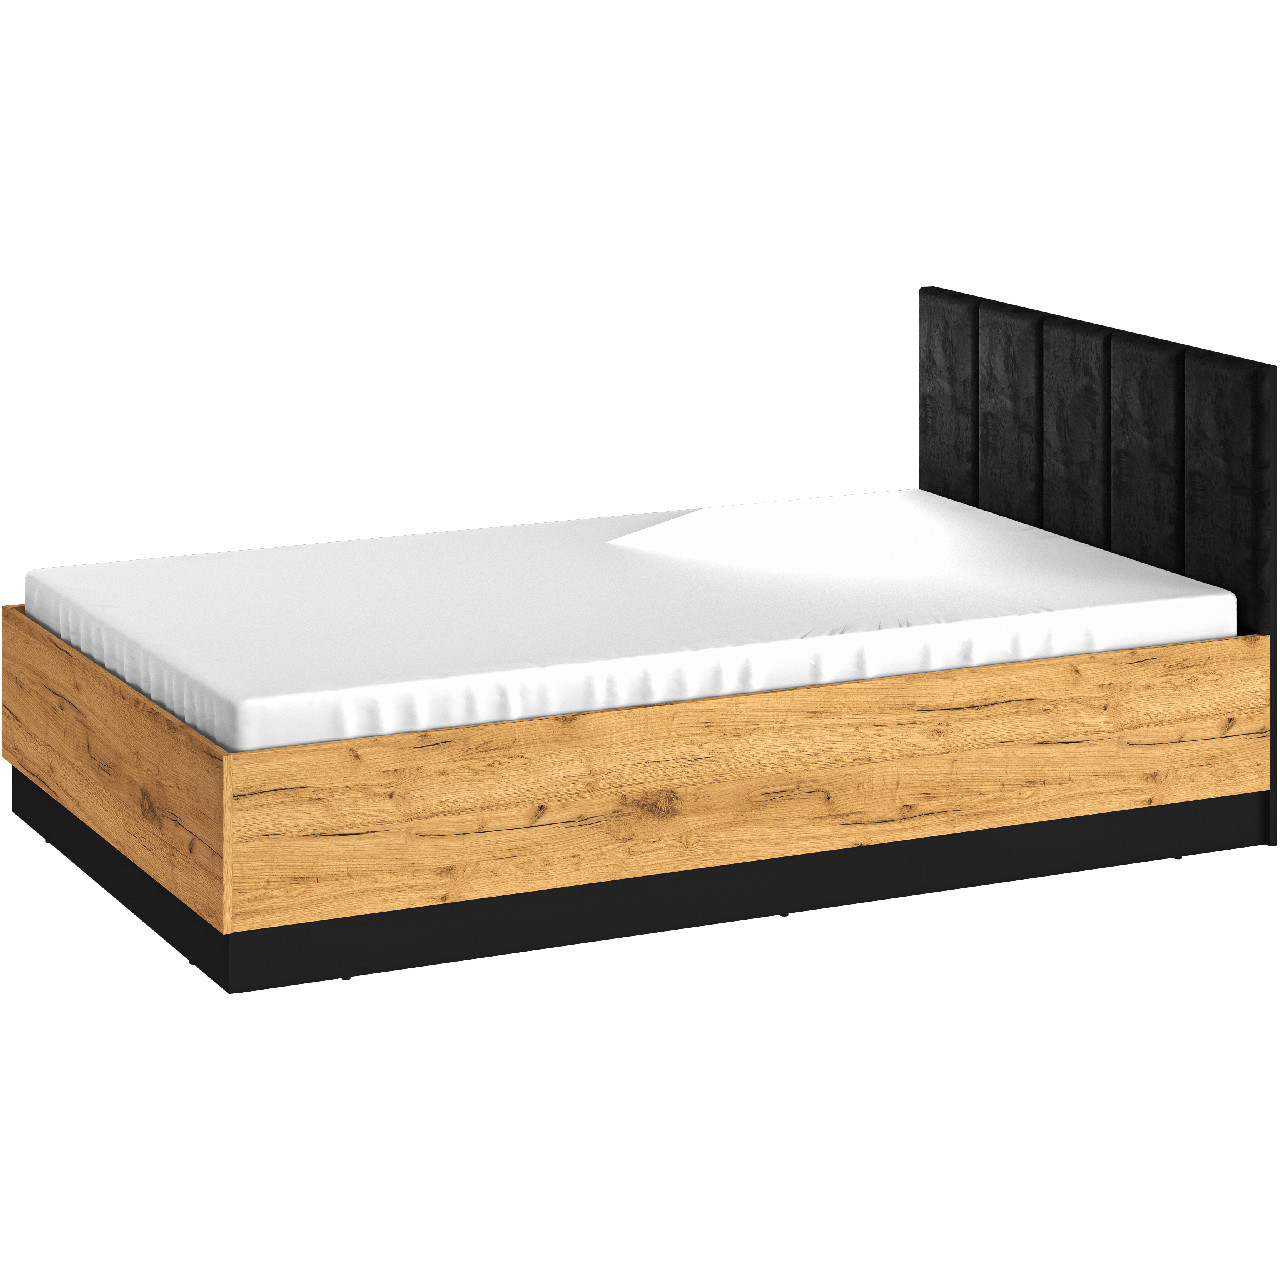 Bed 120x200 CLINT 09 gold craft oak / black